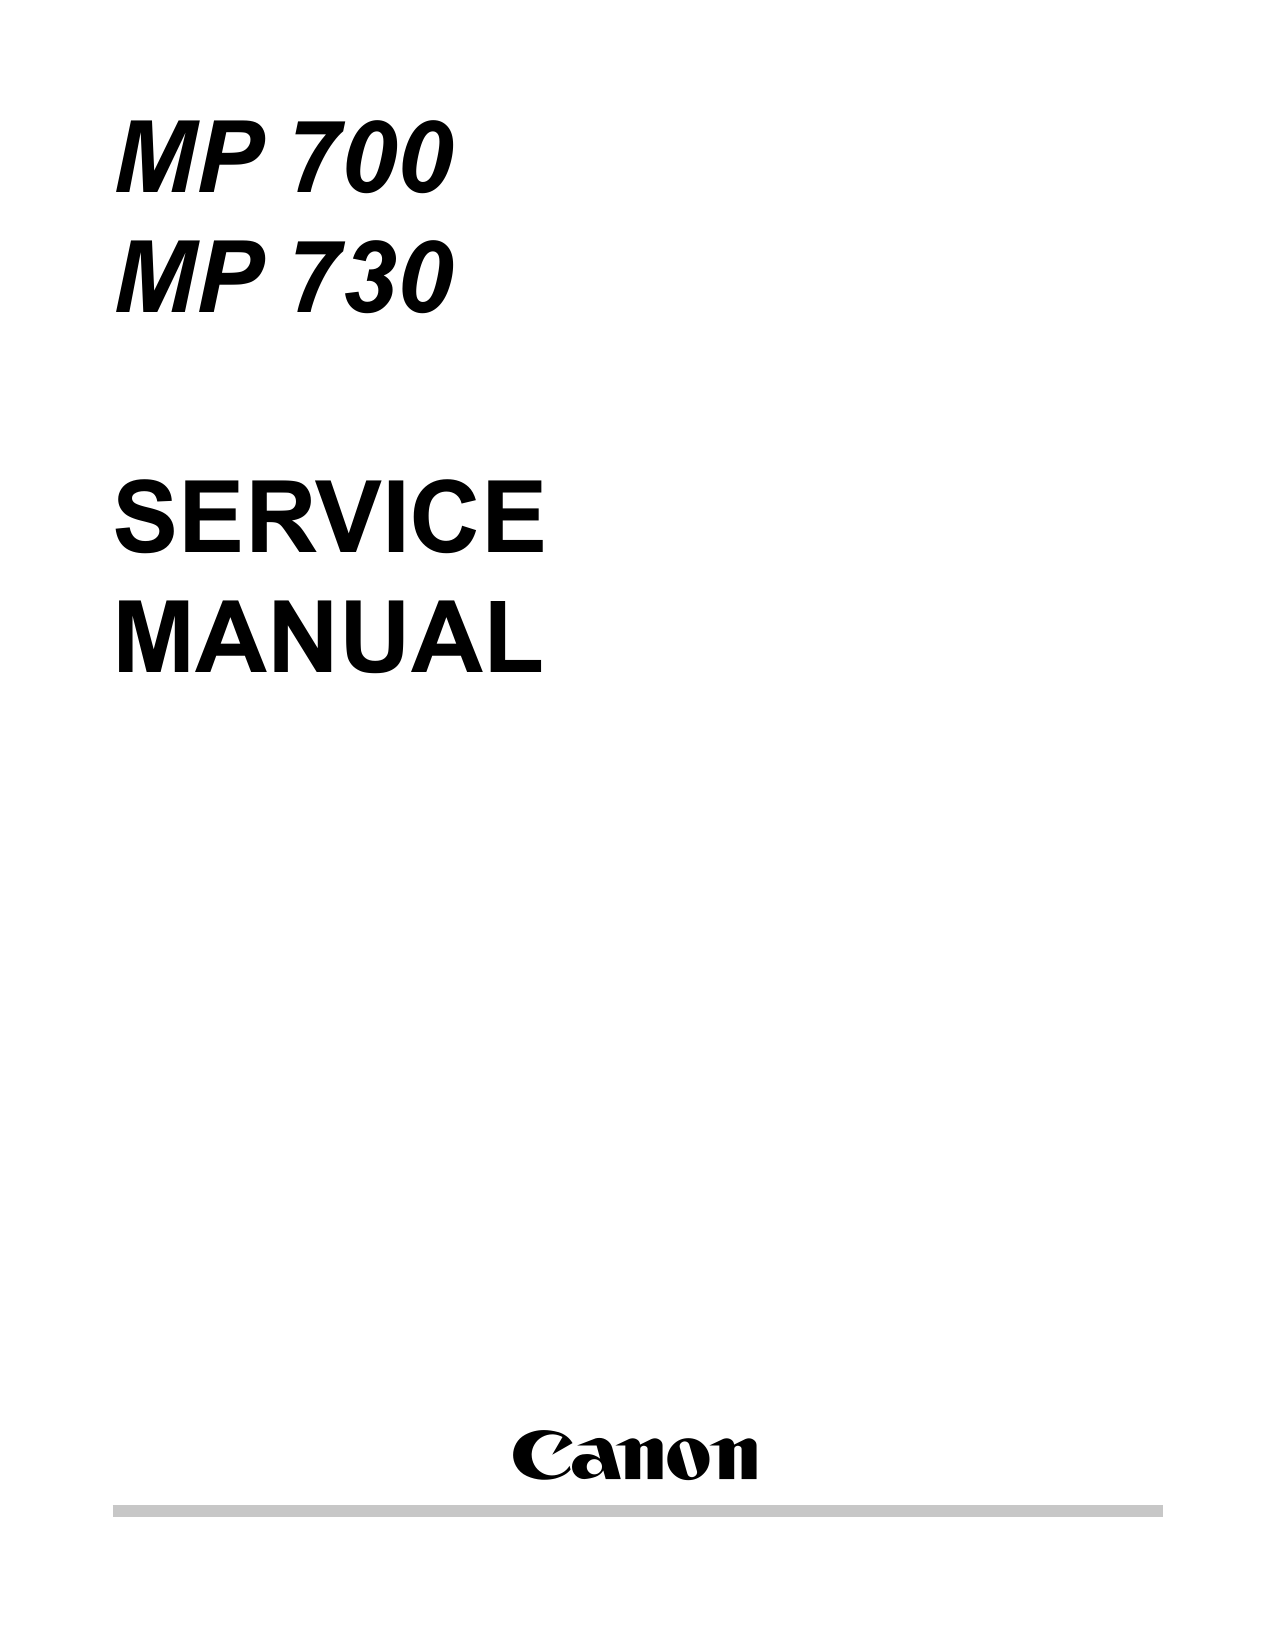 Canon Pixma MP 700, MP 730 multifunction inkjet printer service guide Preview image 6